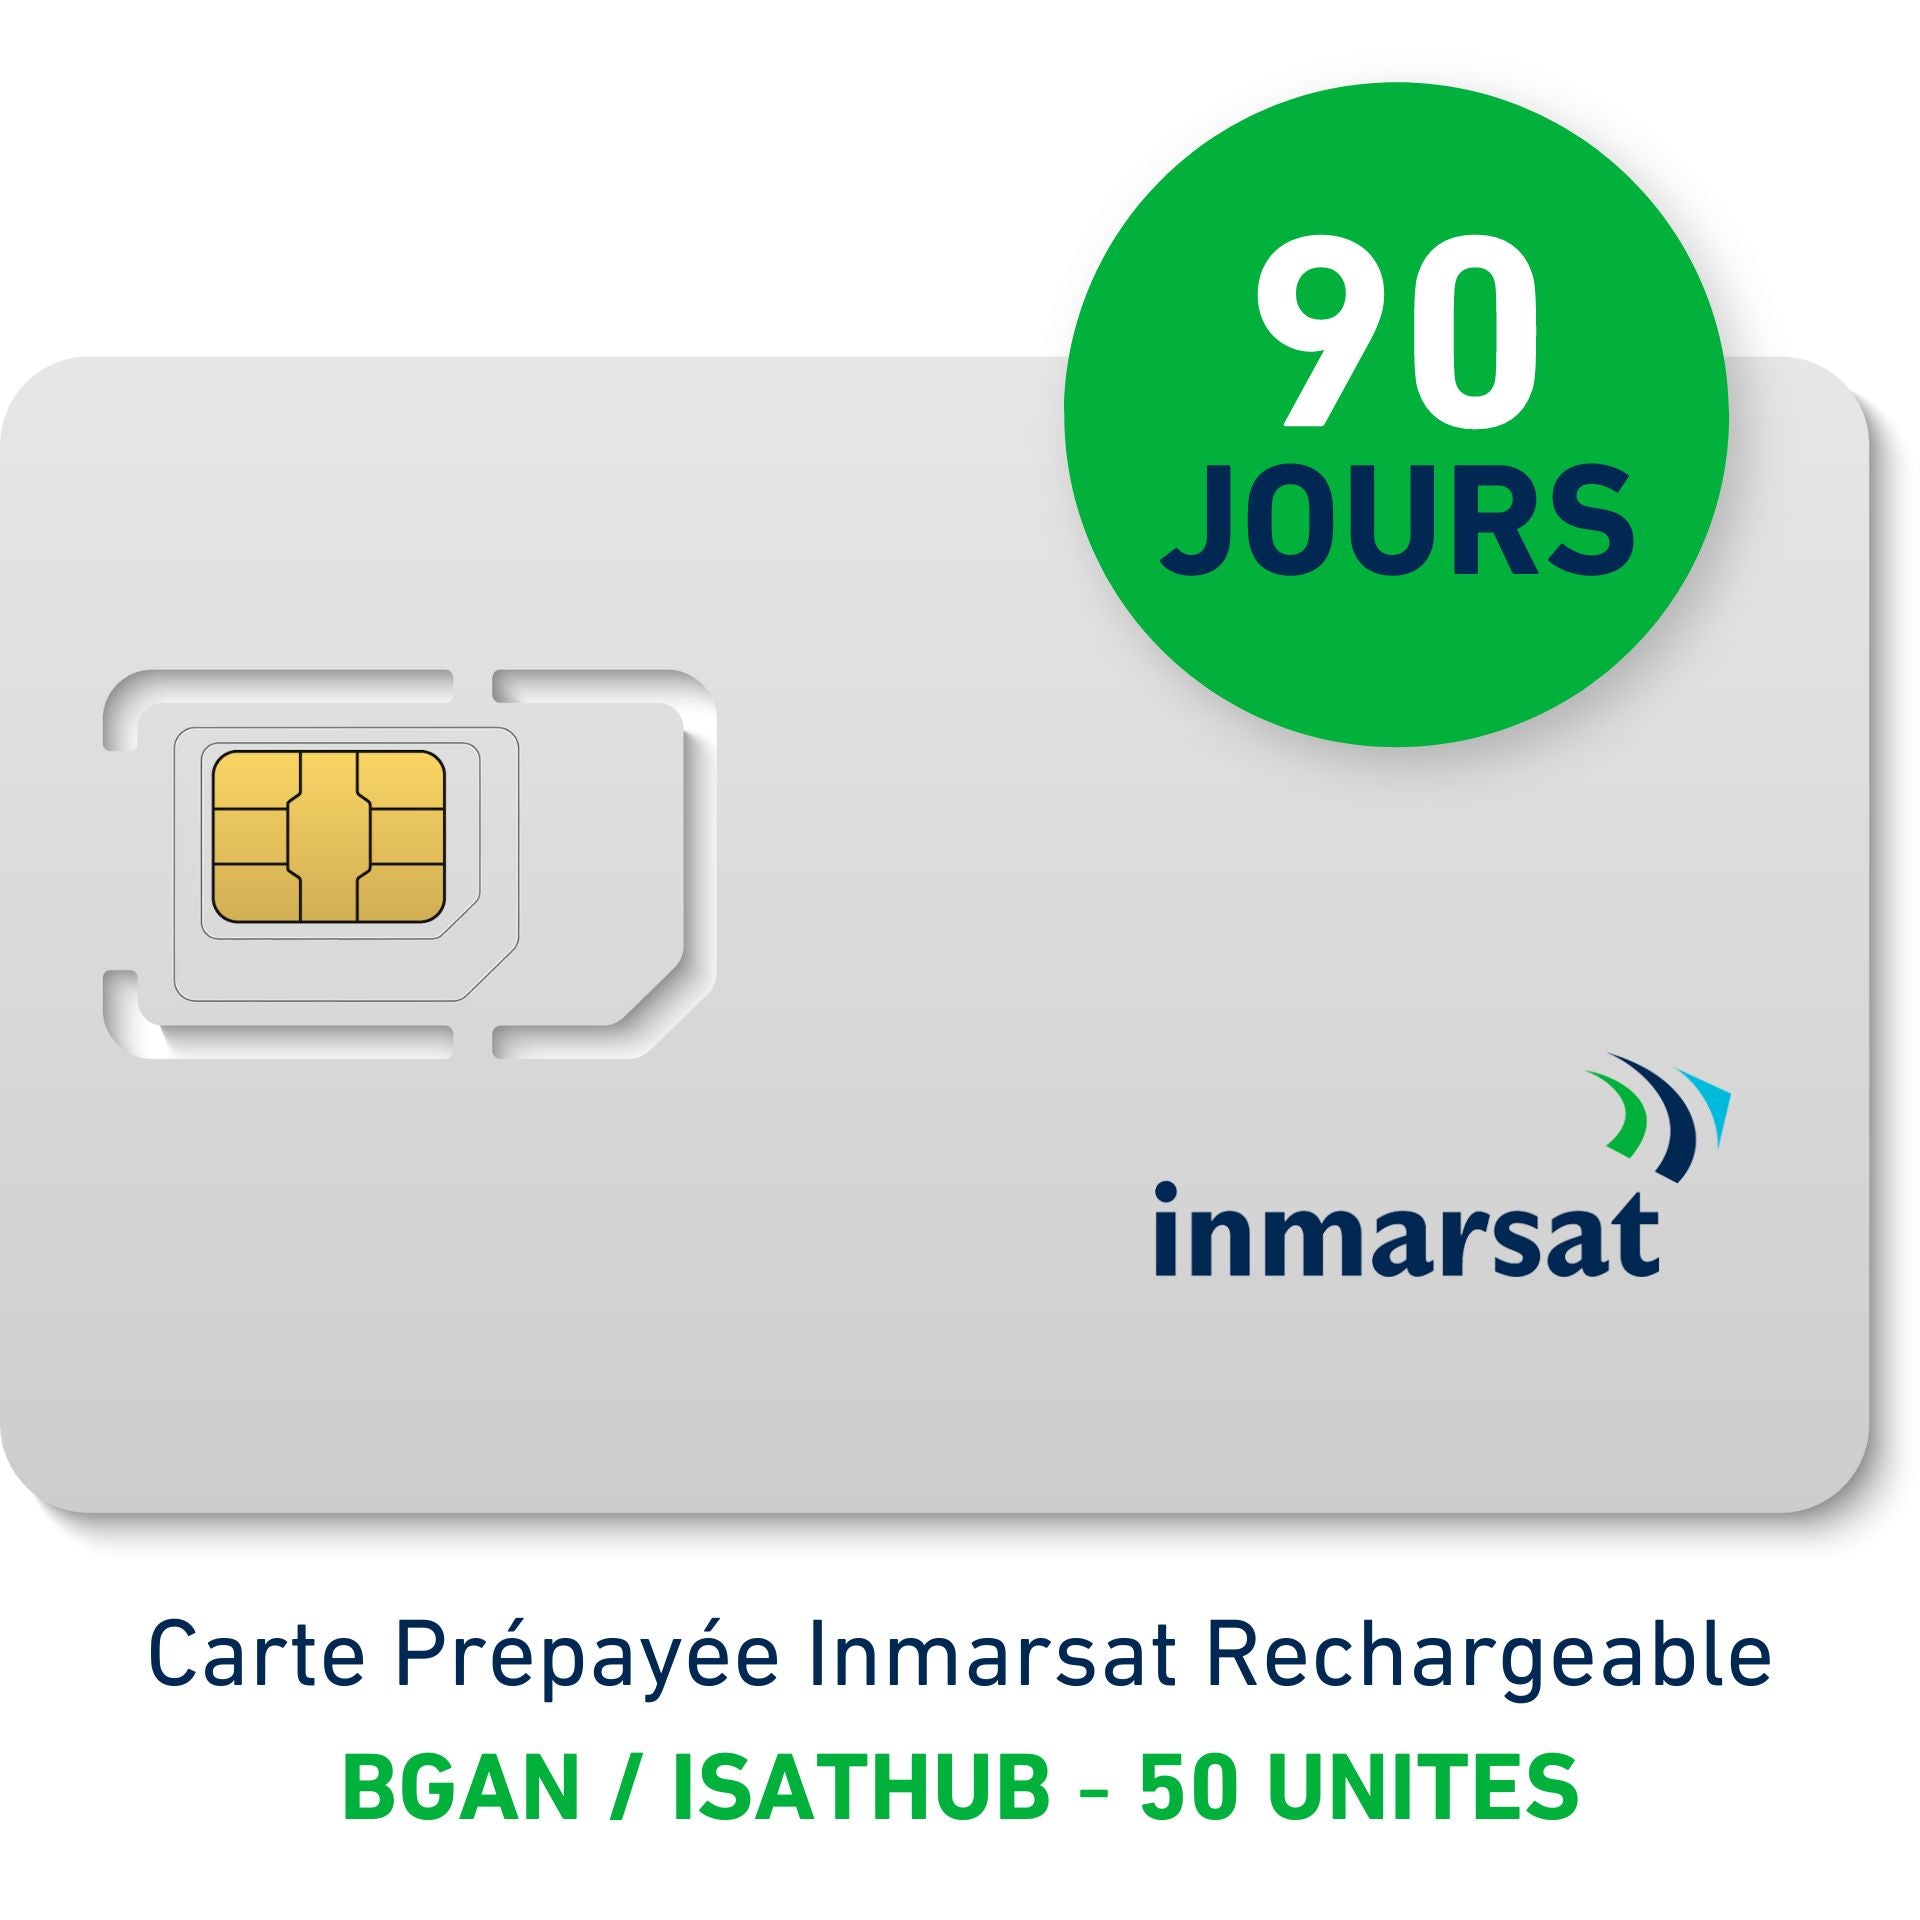 INMARSAT Prepaid-Karte, wiederaufladbar BGAN/IsatHub - 50 UNITS - 90 TAGE